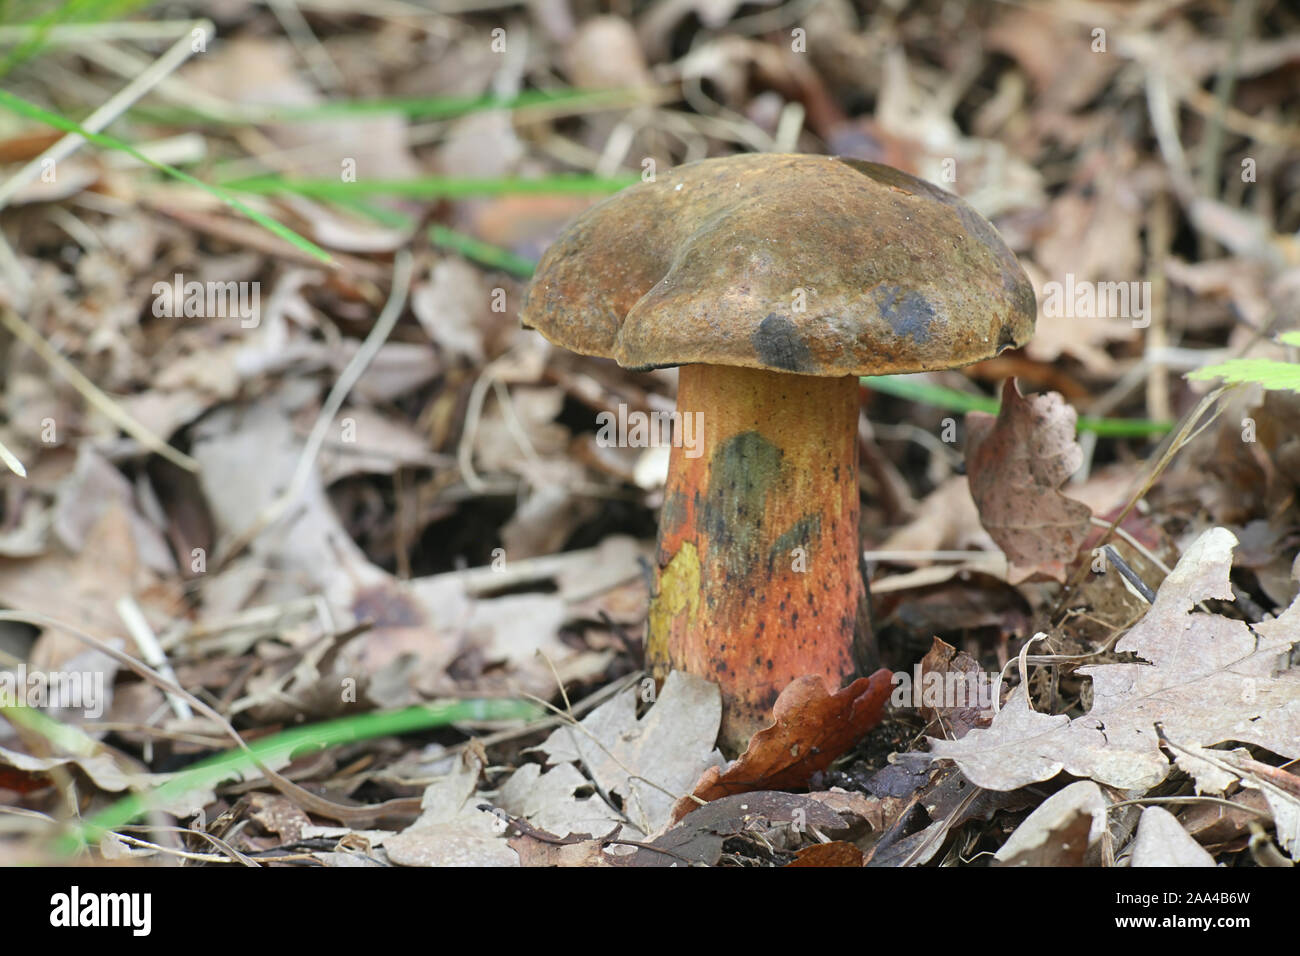 Neoboletus luridiformis, or Boletus luridiformis, known as the scarletina bolete, wild mushrooms from Finland Stock Photo